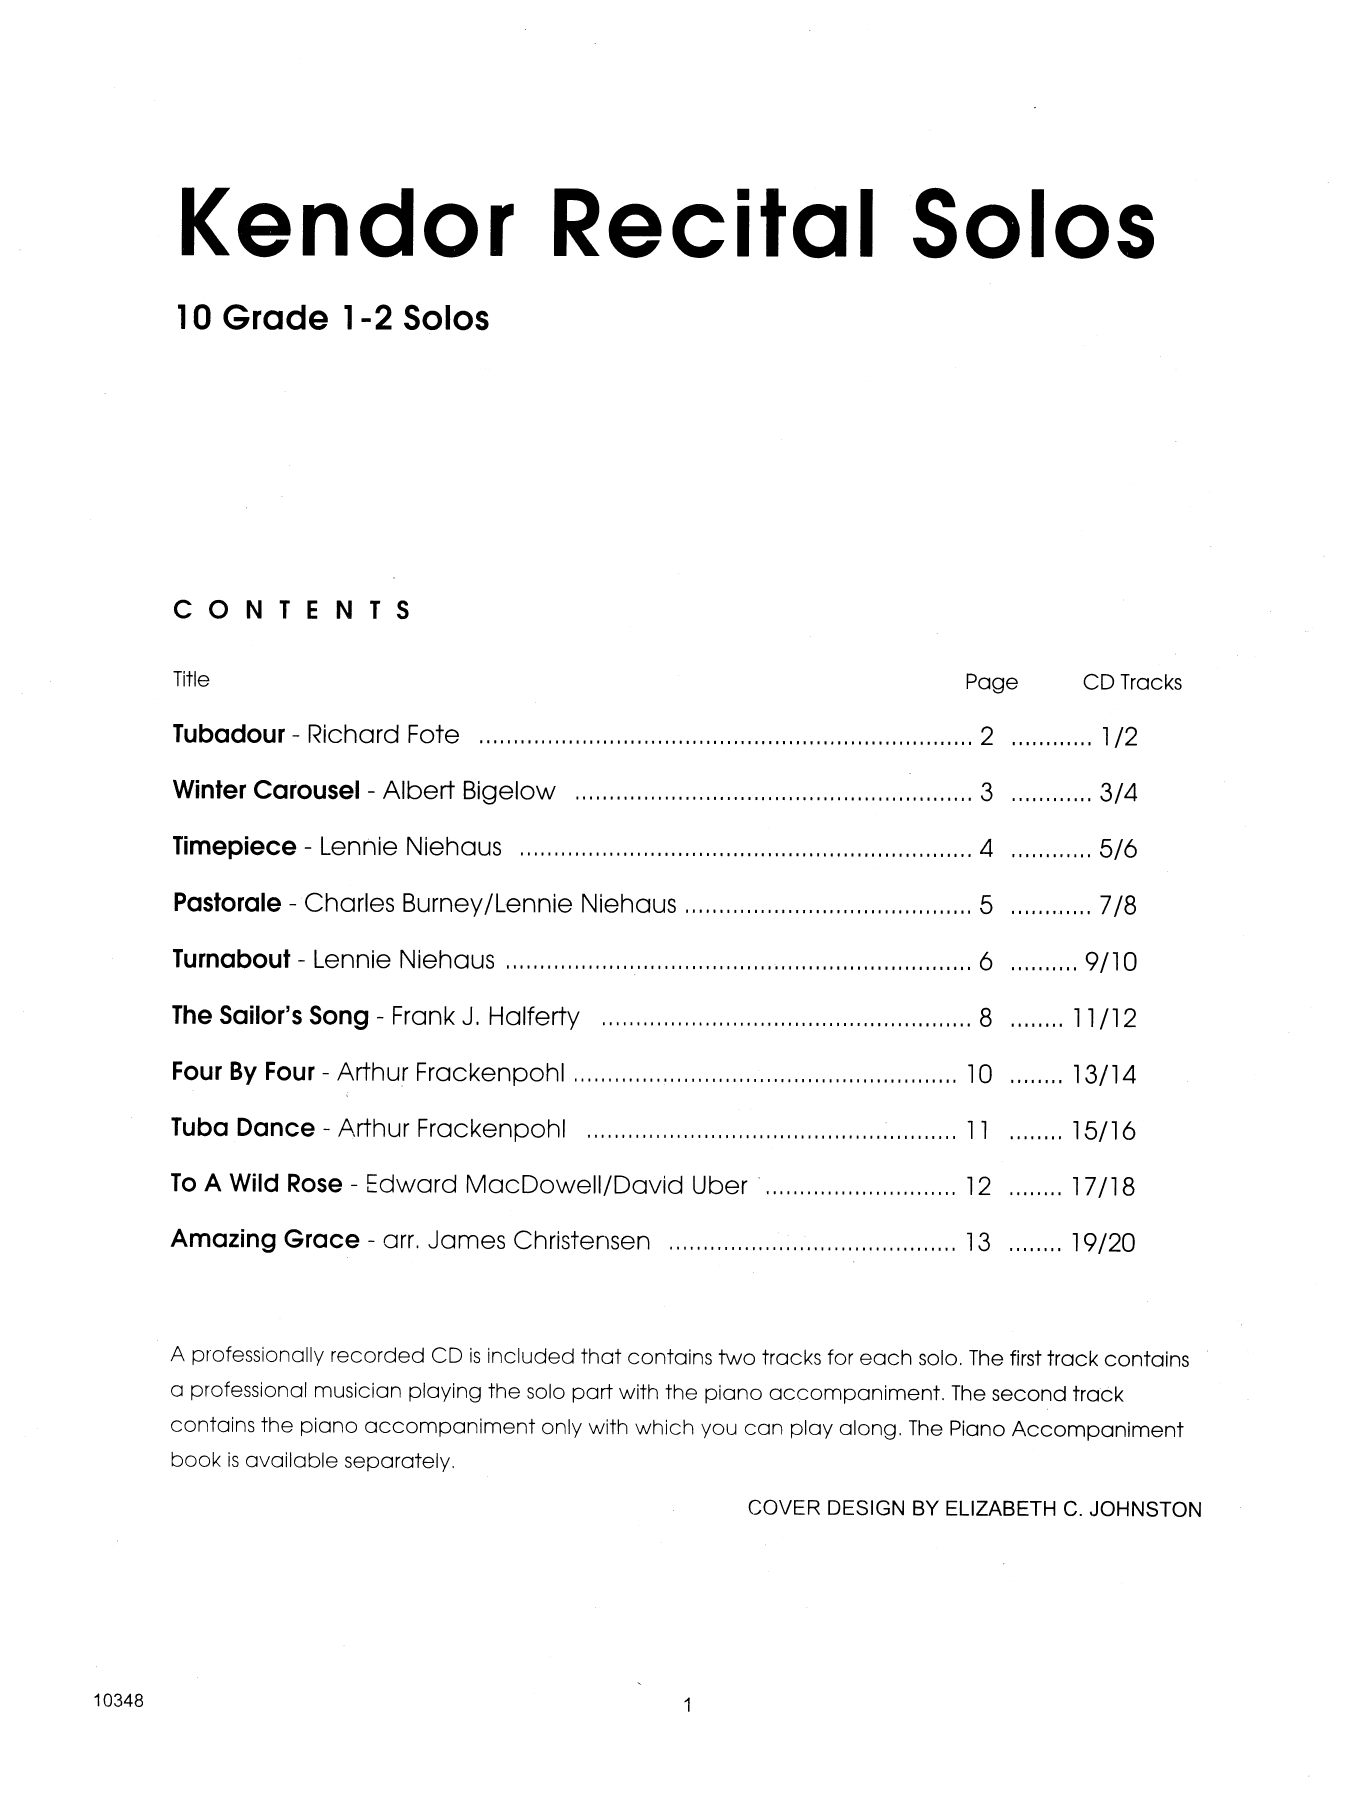 Download Various Kendor Recital Solos - Tuba - Solo Book Sheet Music